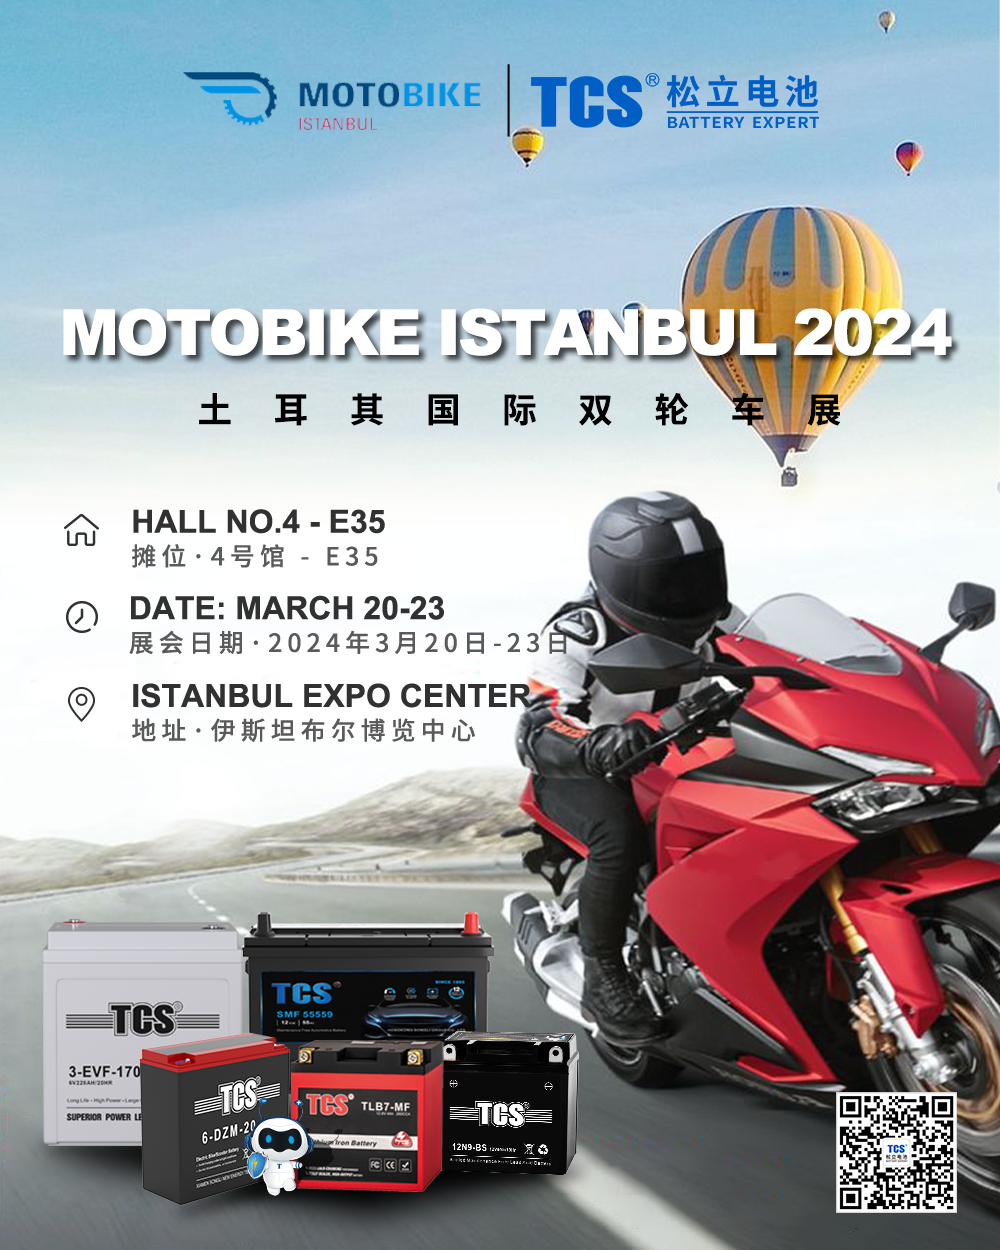 TCS Battery Motopaika Istanbul 2024